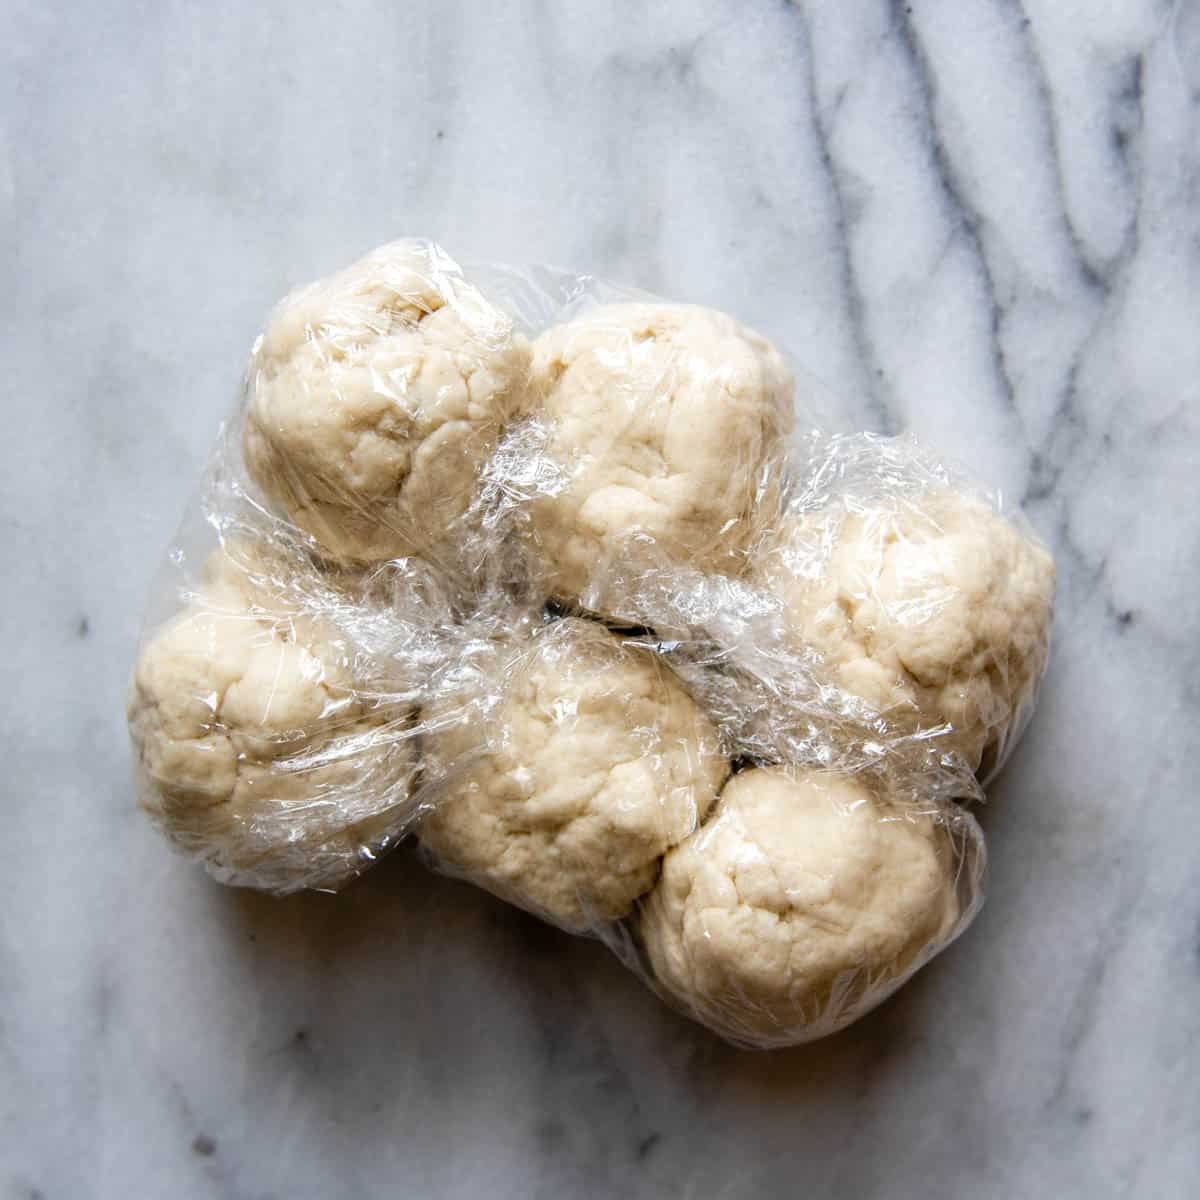 6 balls of dough in plastic wrap.